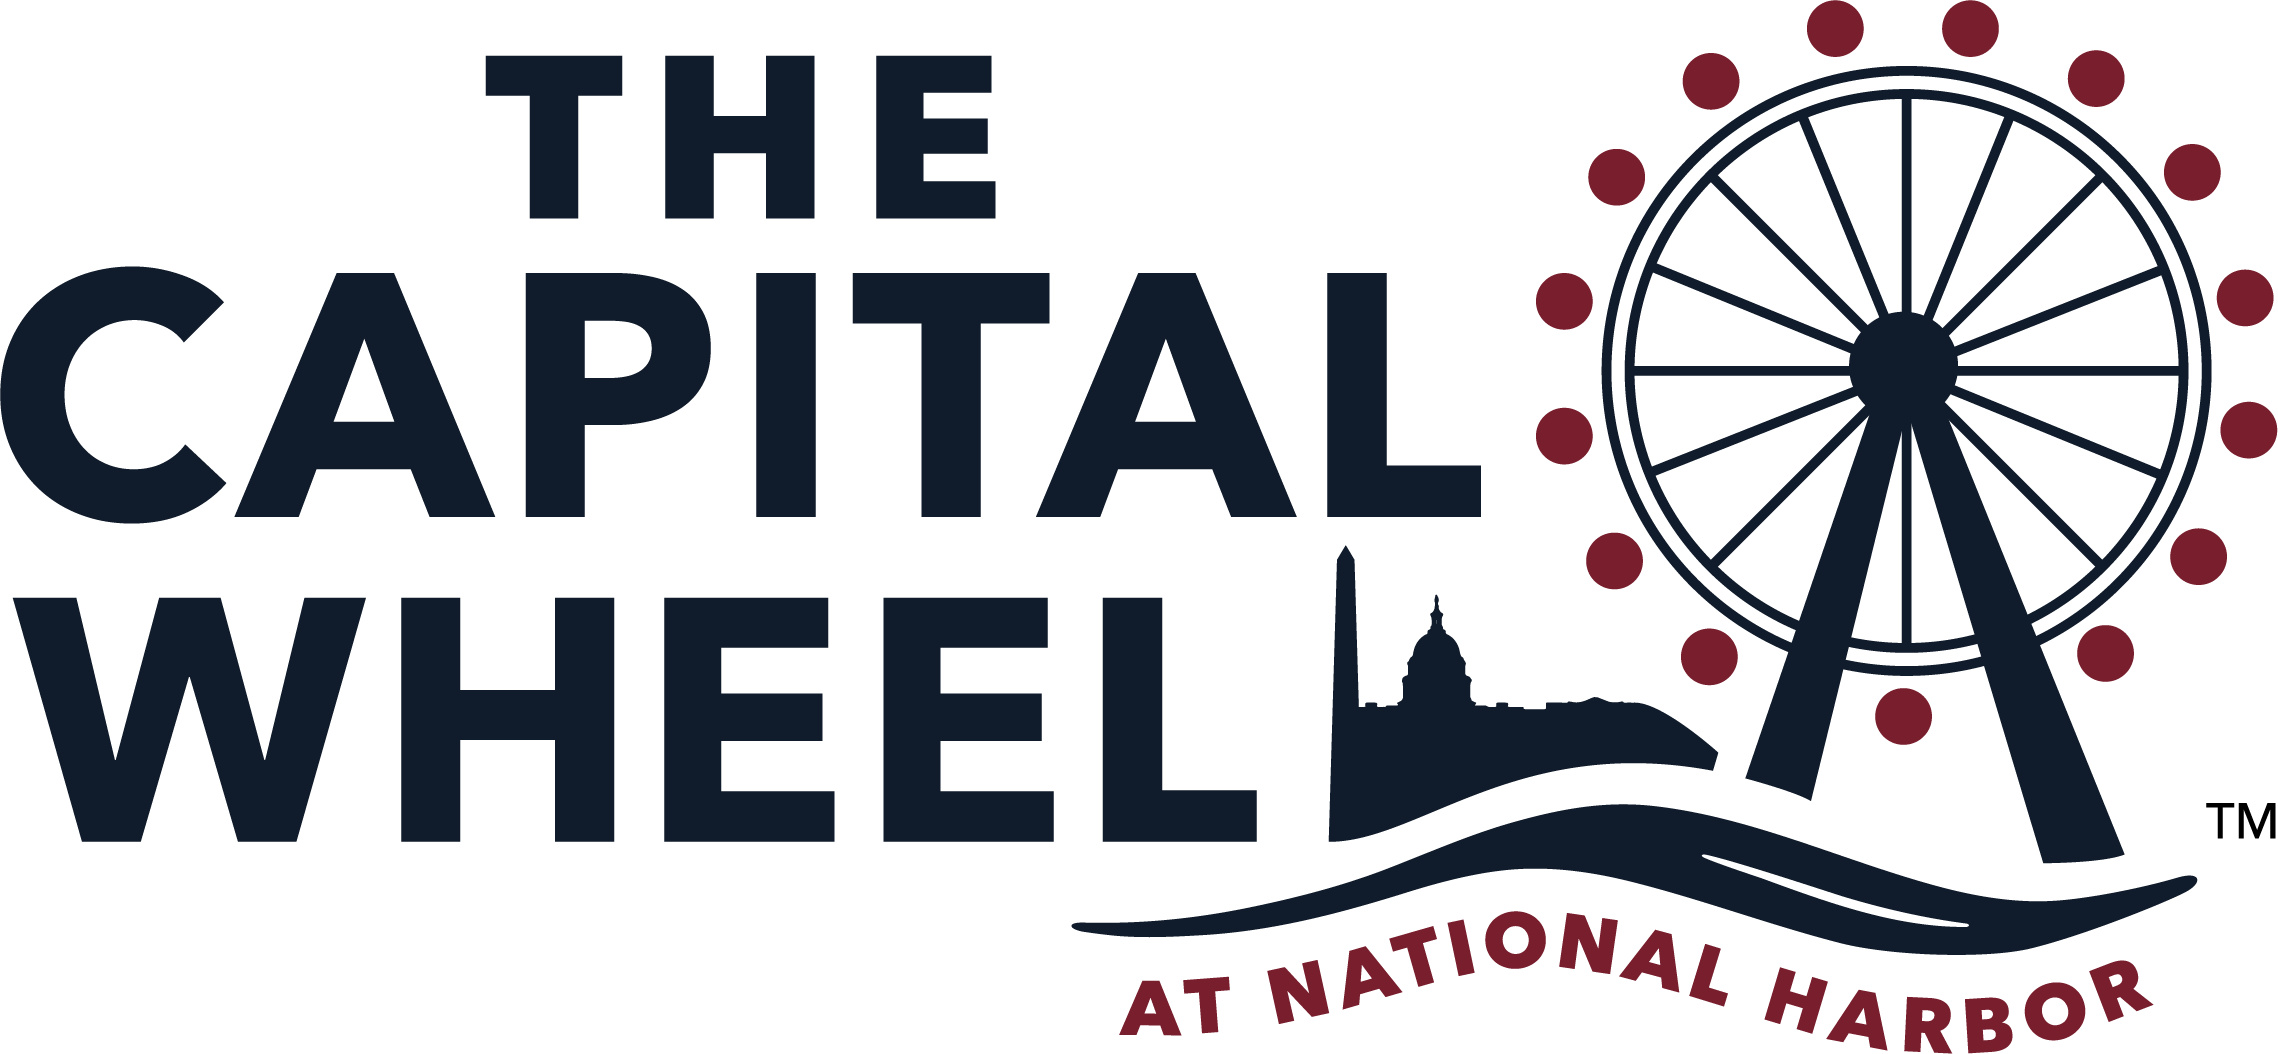 The Capital Wheel